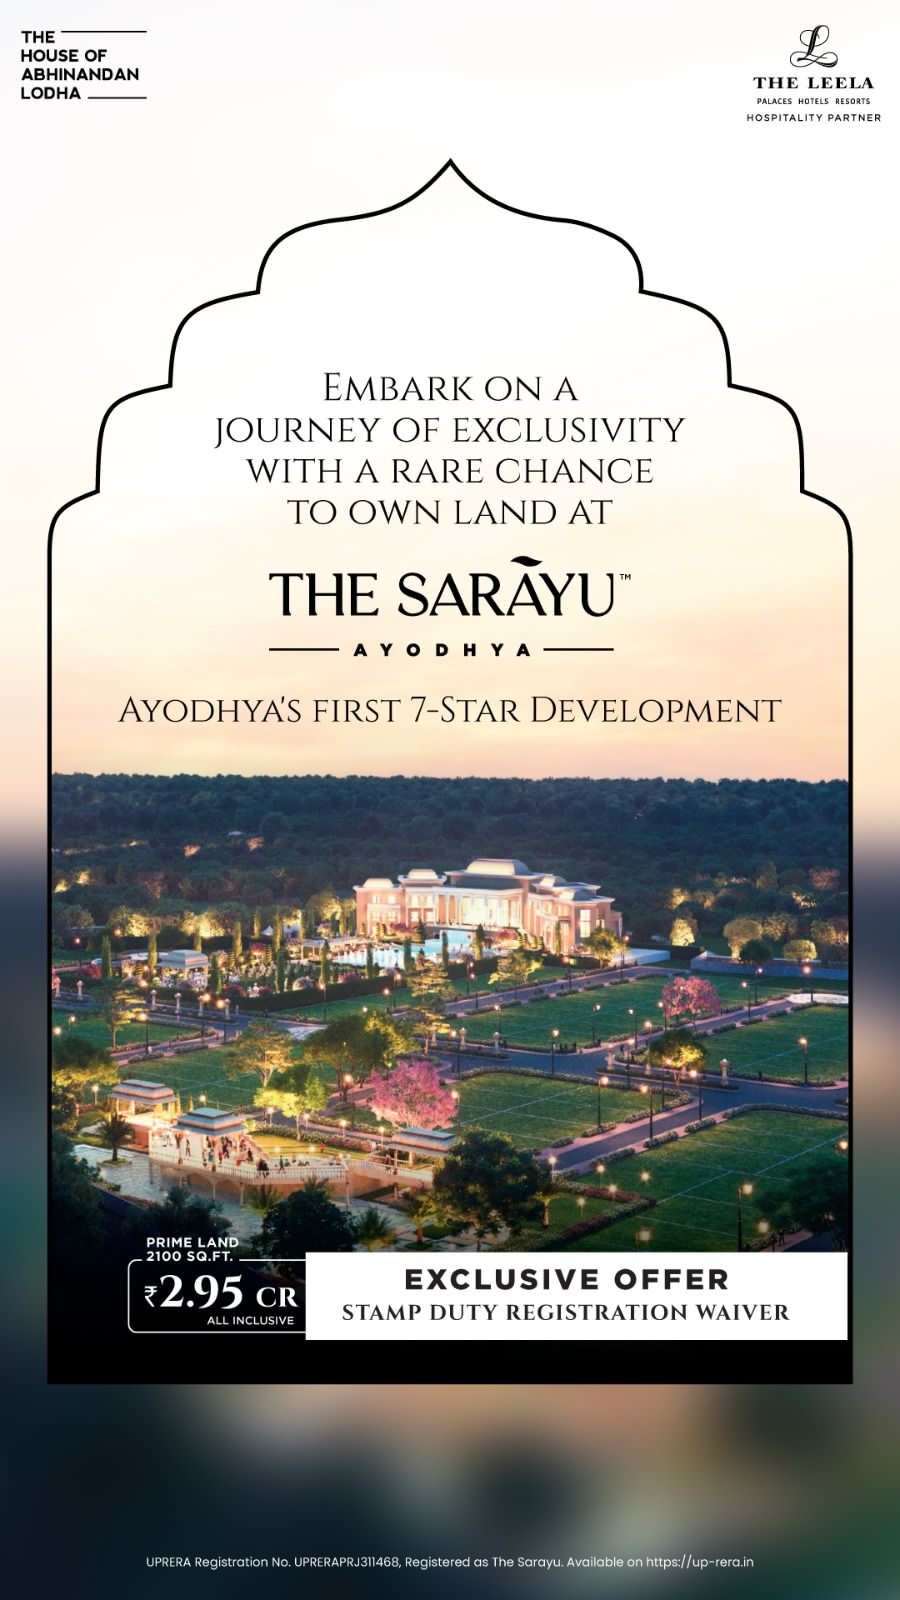 The Sarayu Ayodhya: Exclusive Land Ownership with Abhinandan Lodha and The Leela Update